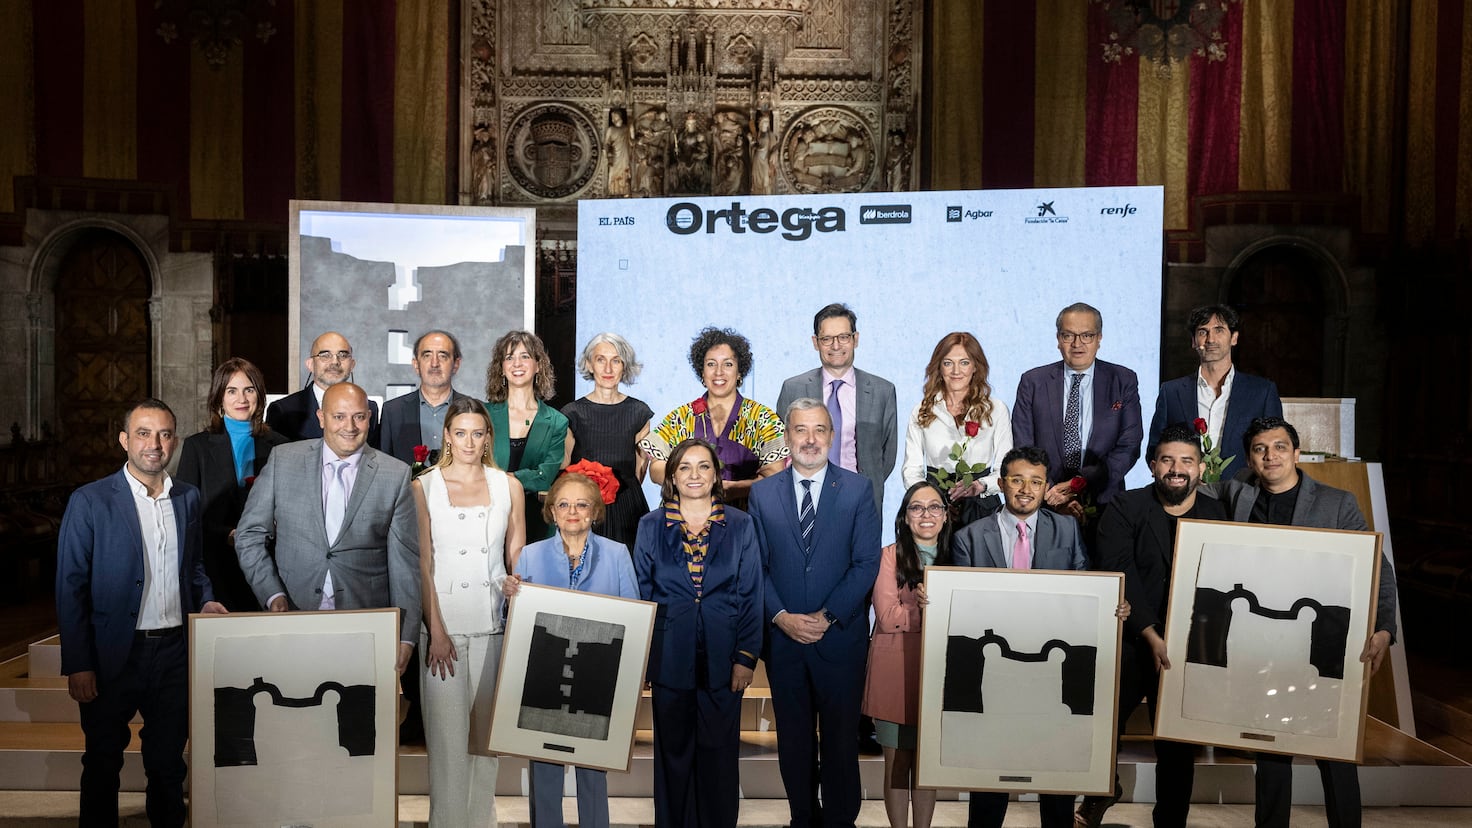 The Ortega y Gasset Awards vindicate good journalism
